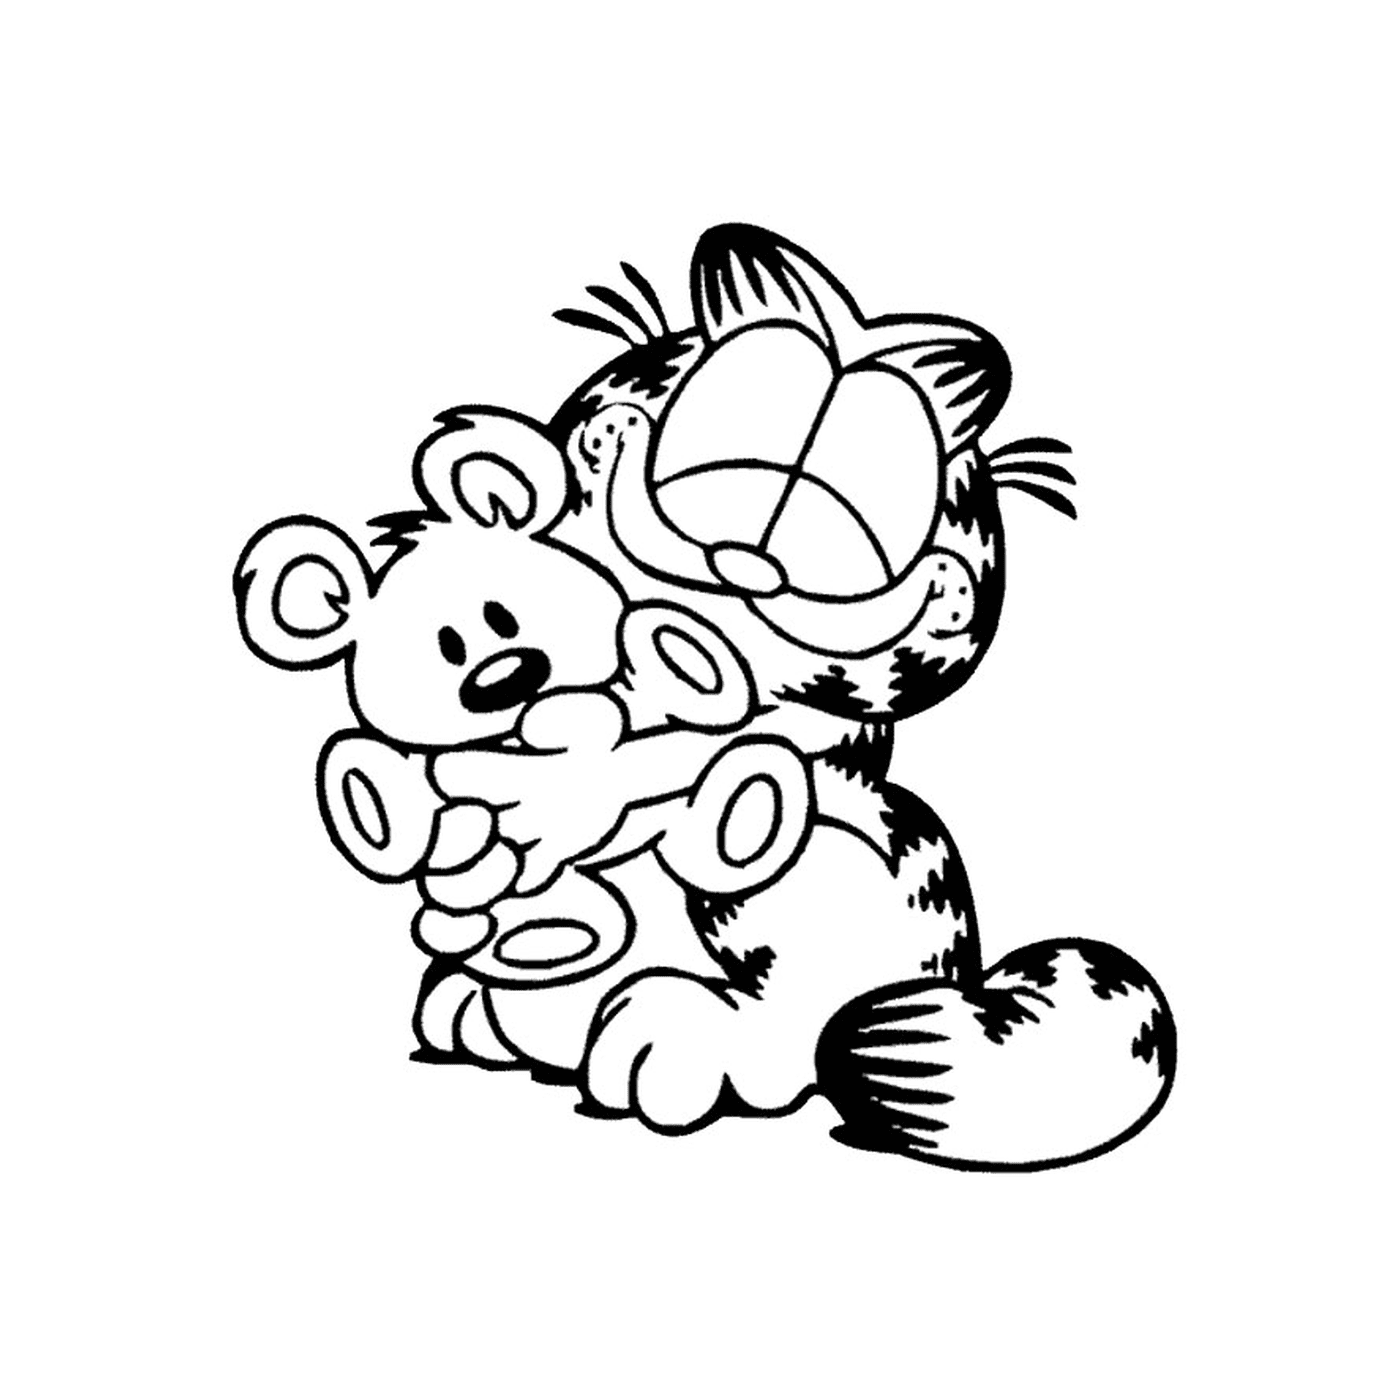  Garfield holding a teddy bear 